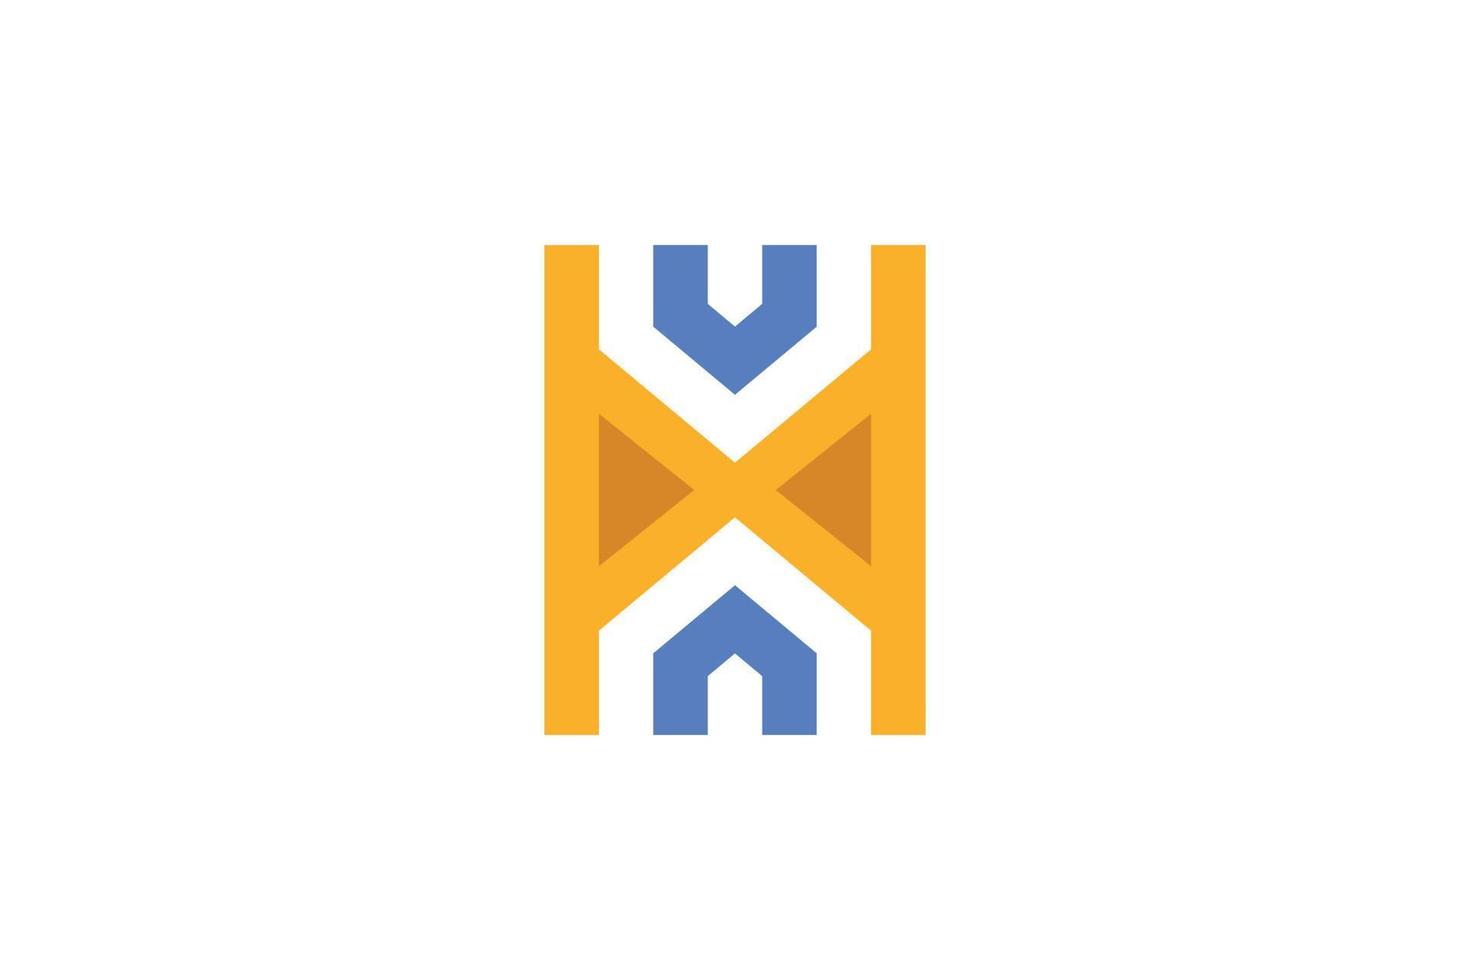 Colorful Letter H Logo vector